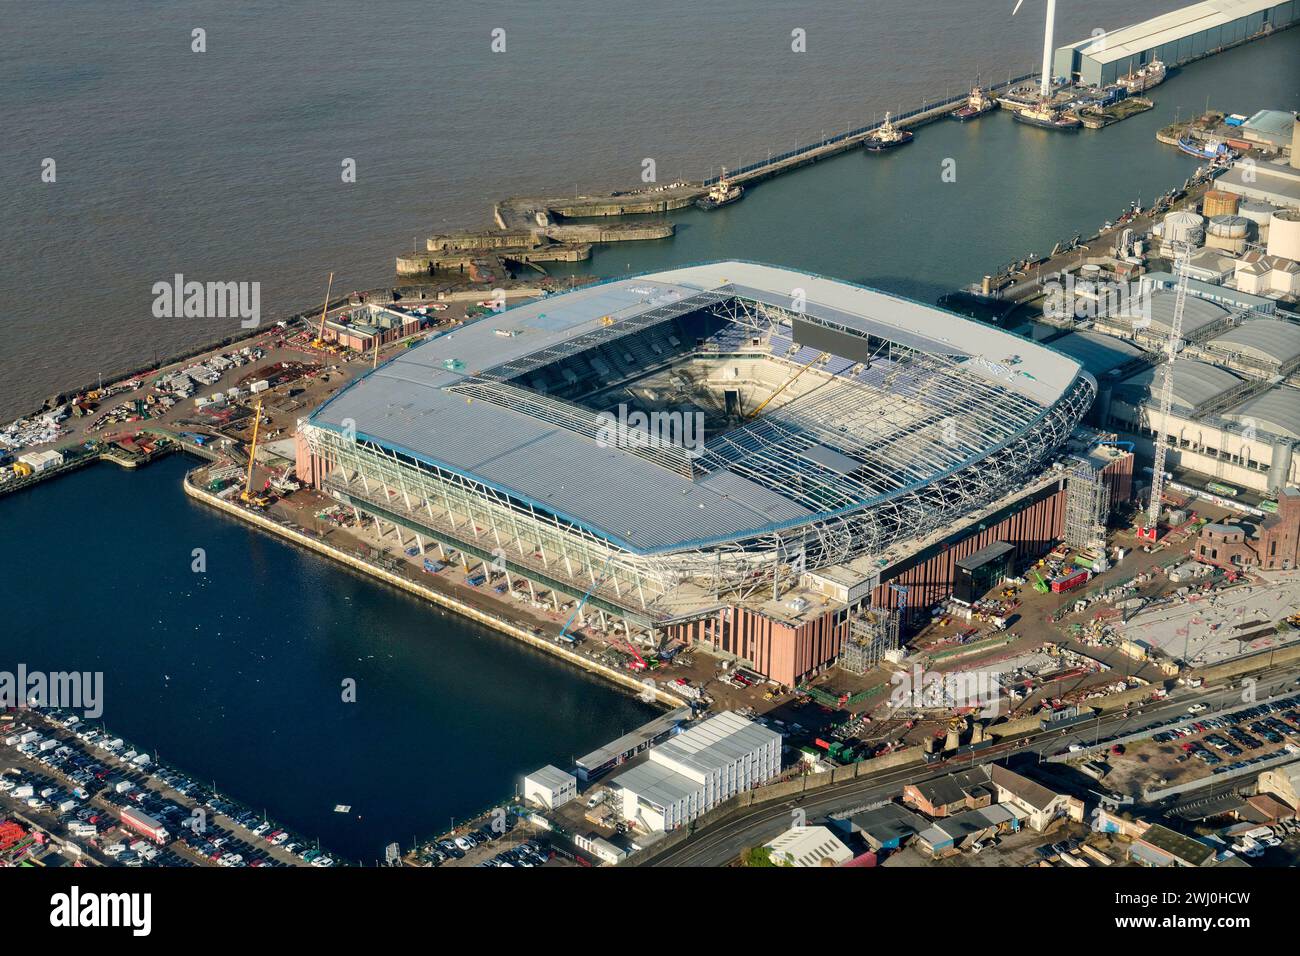 The New Everton Football Club stadium at Bramley Moore Dock, Merseyside, Liverpool, North West England, Uk, under construction Stock Photo